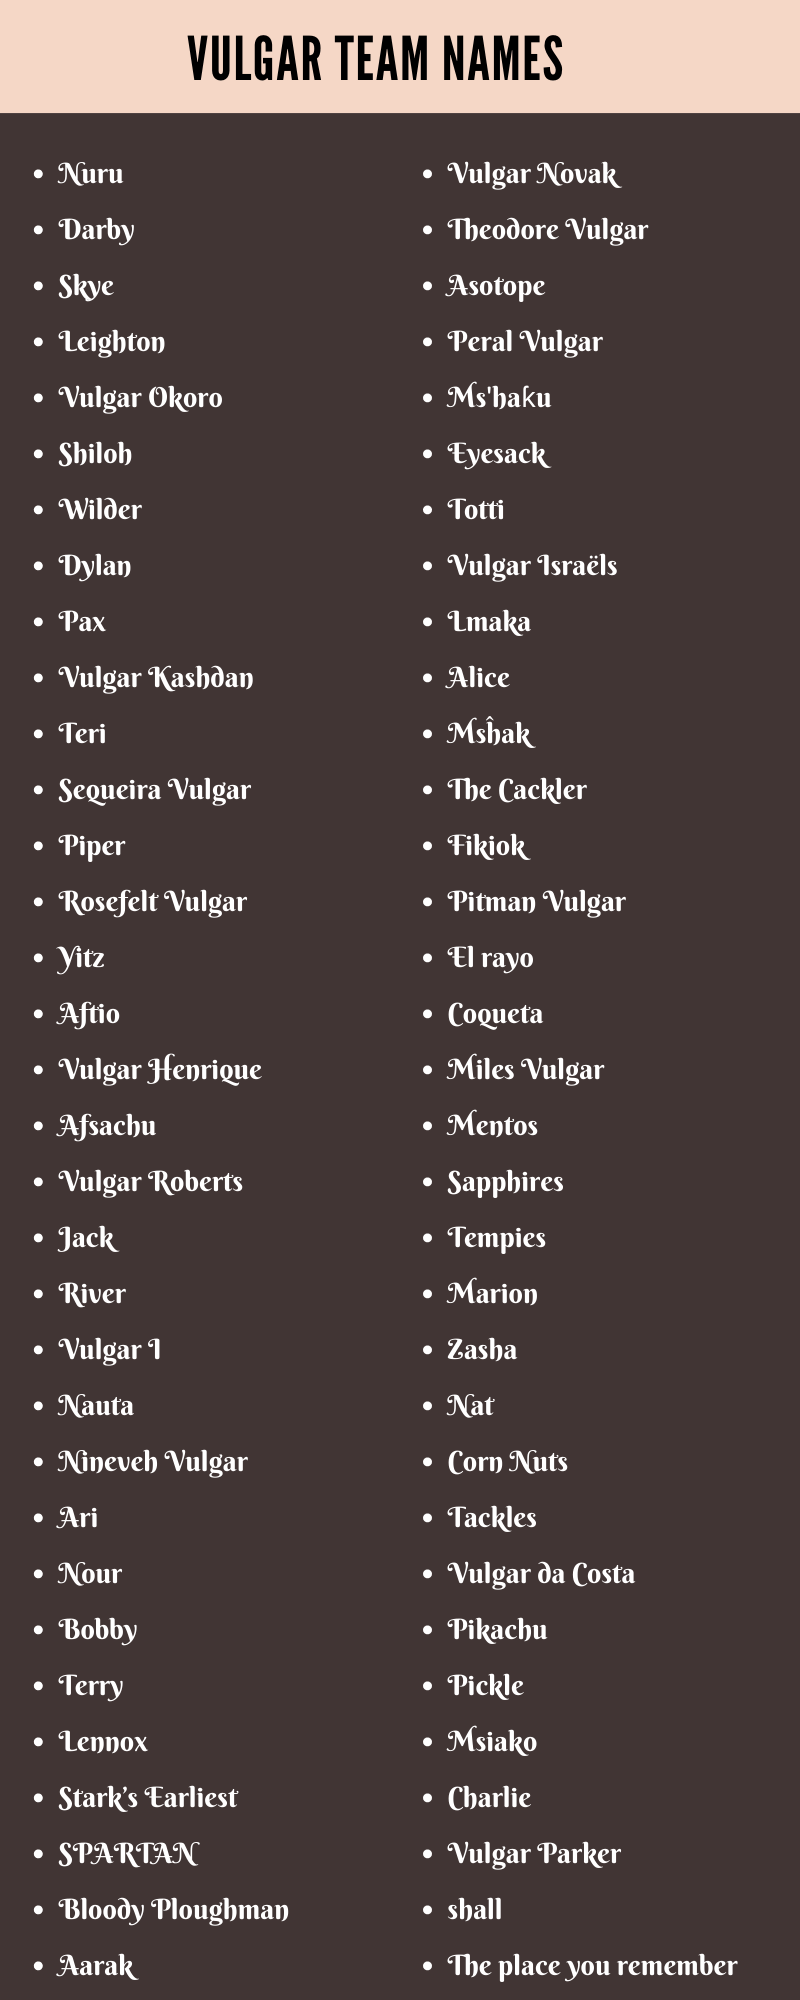 Vulgar Team Names